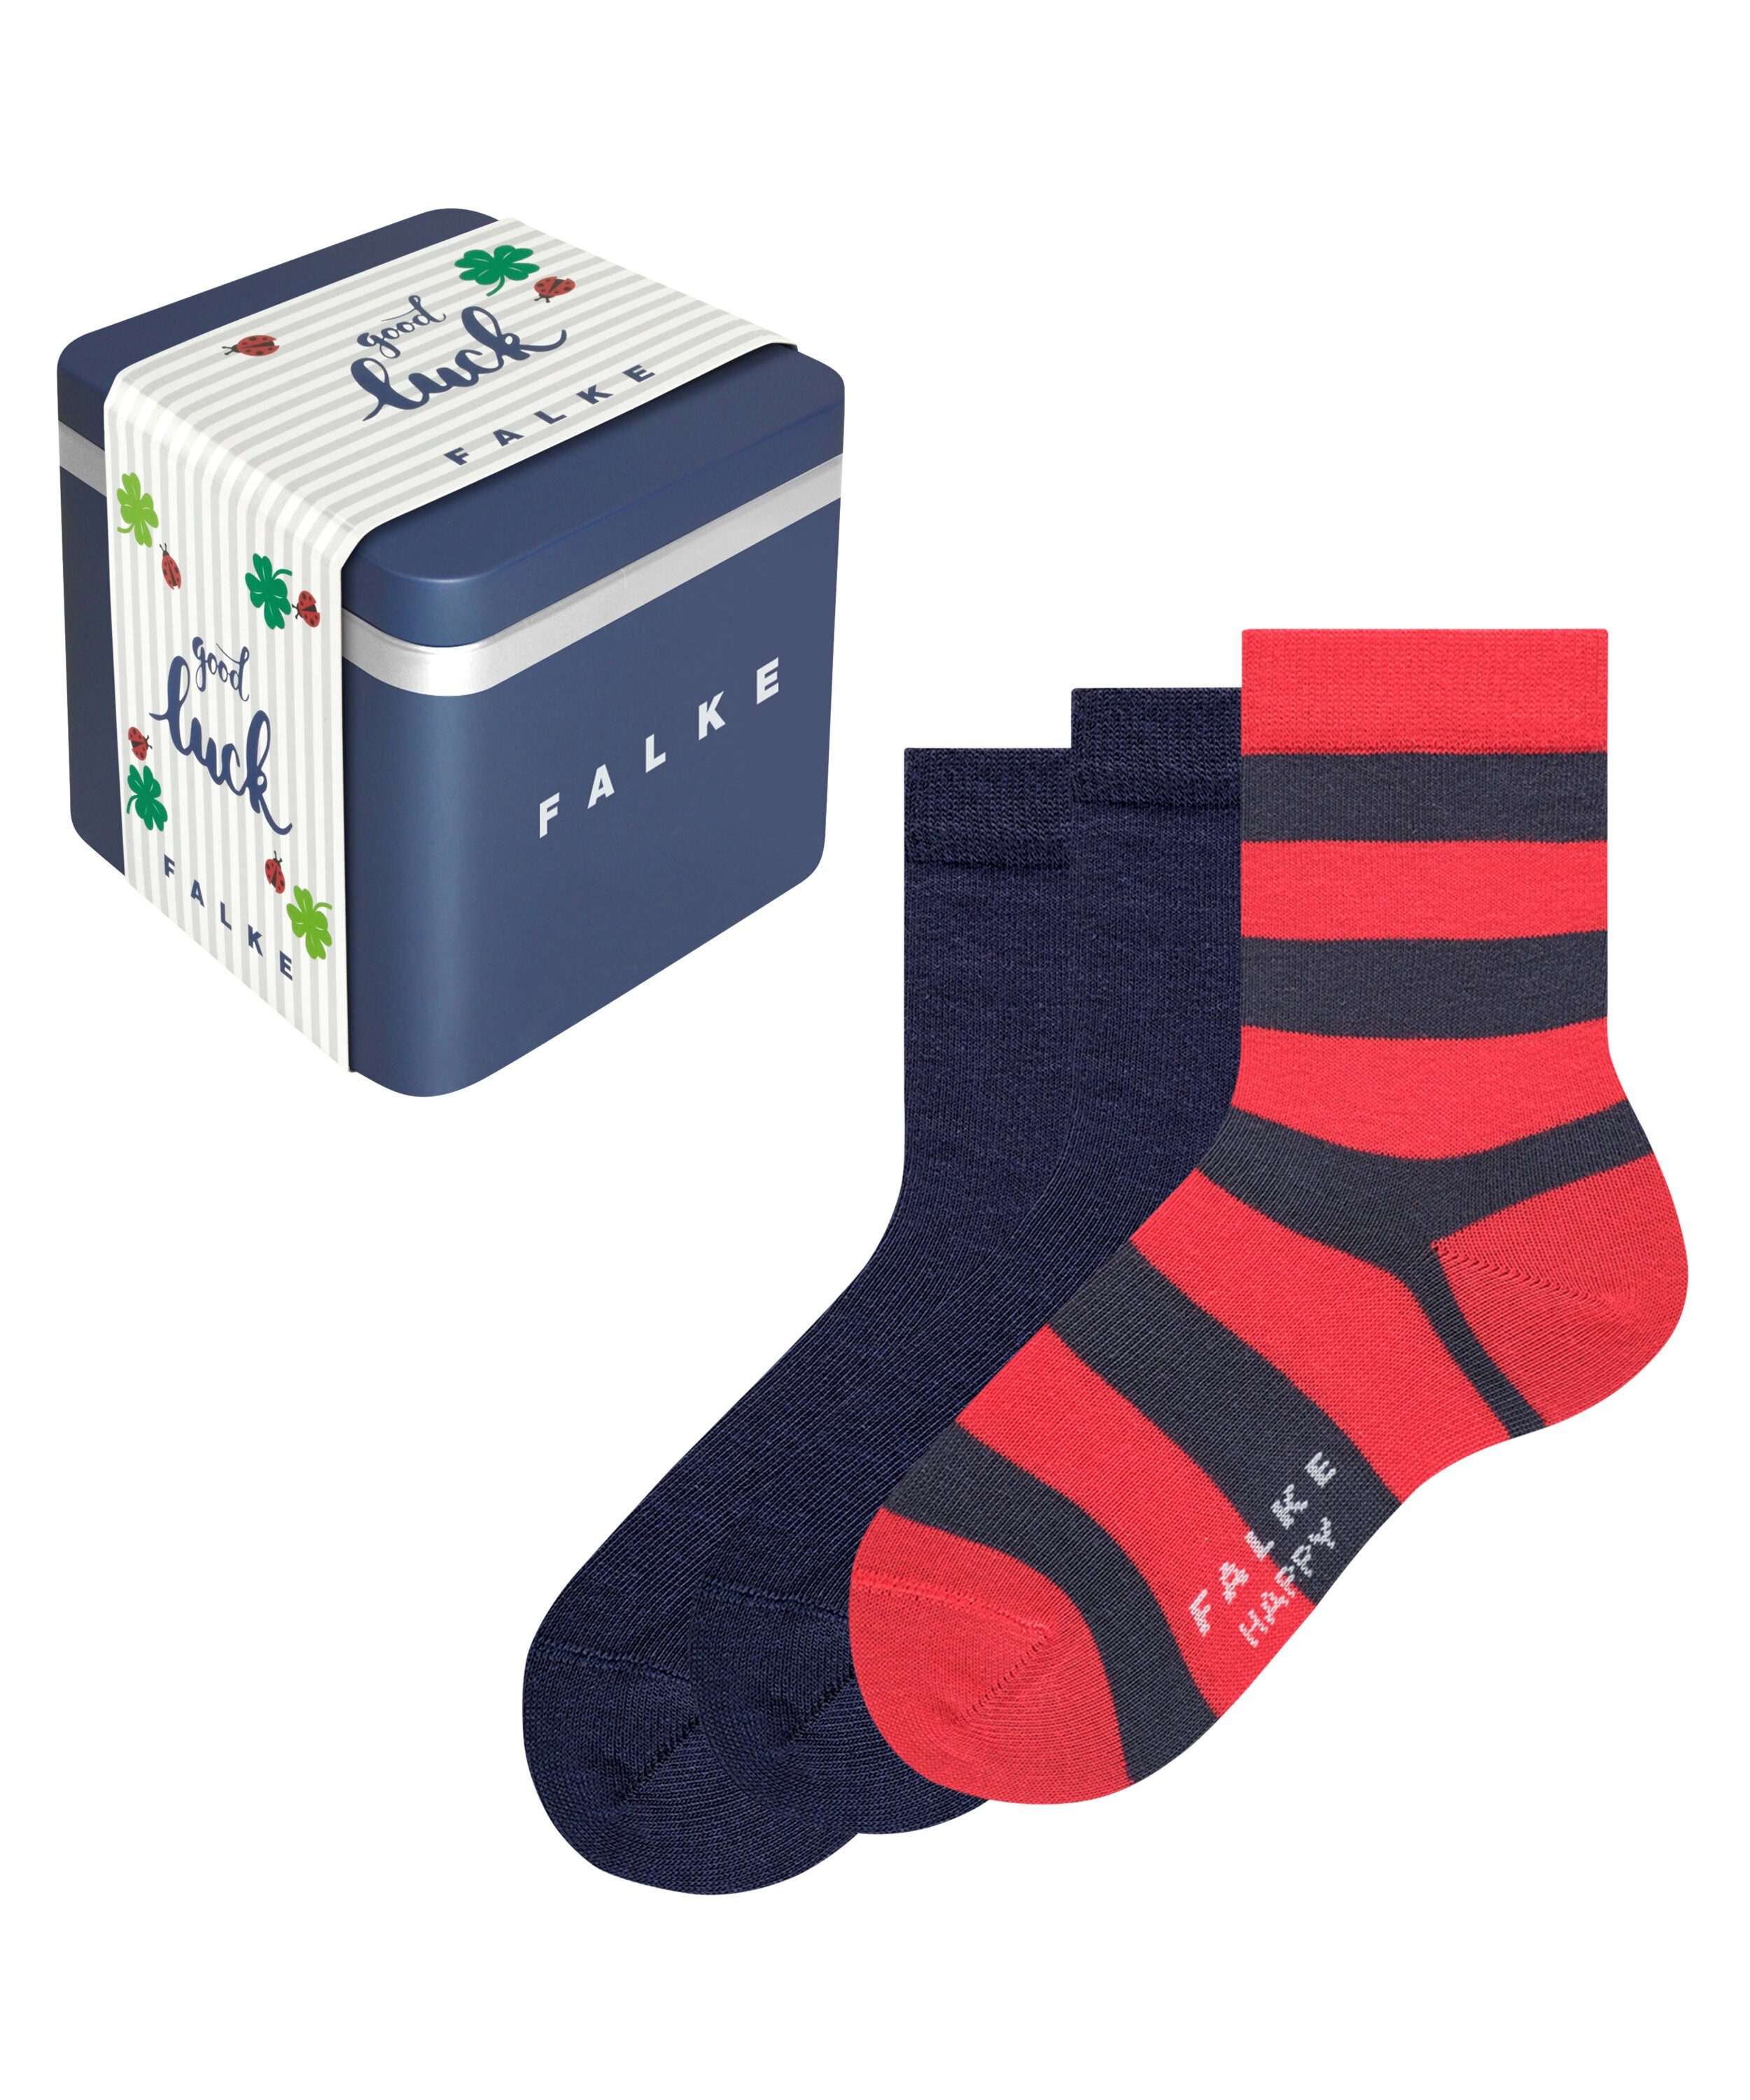 FALKE Socken Happy Giftbox 3-Pack (3-Paar) sortiment (0030)